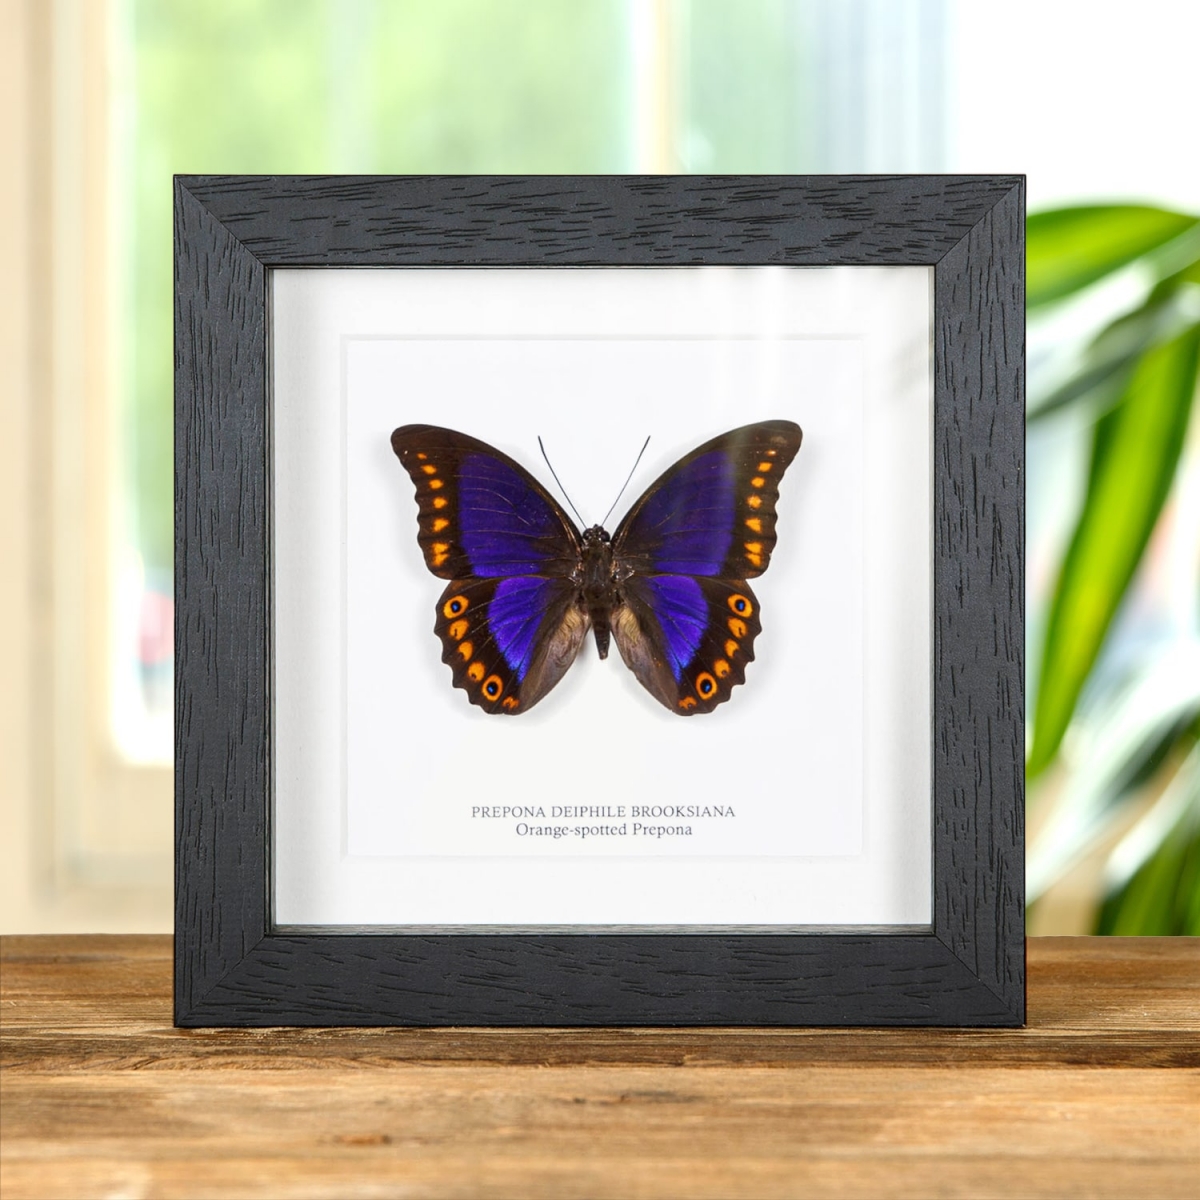 Minibeast Male Orange-spotted Prepona Butterfly in Box Frame (Prepona deiphile brooksiana)